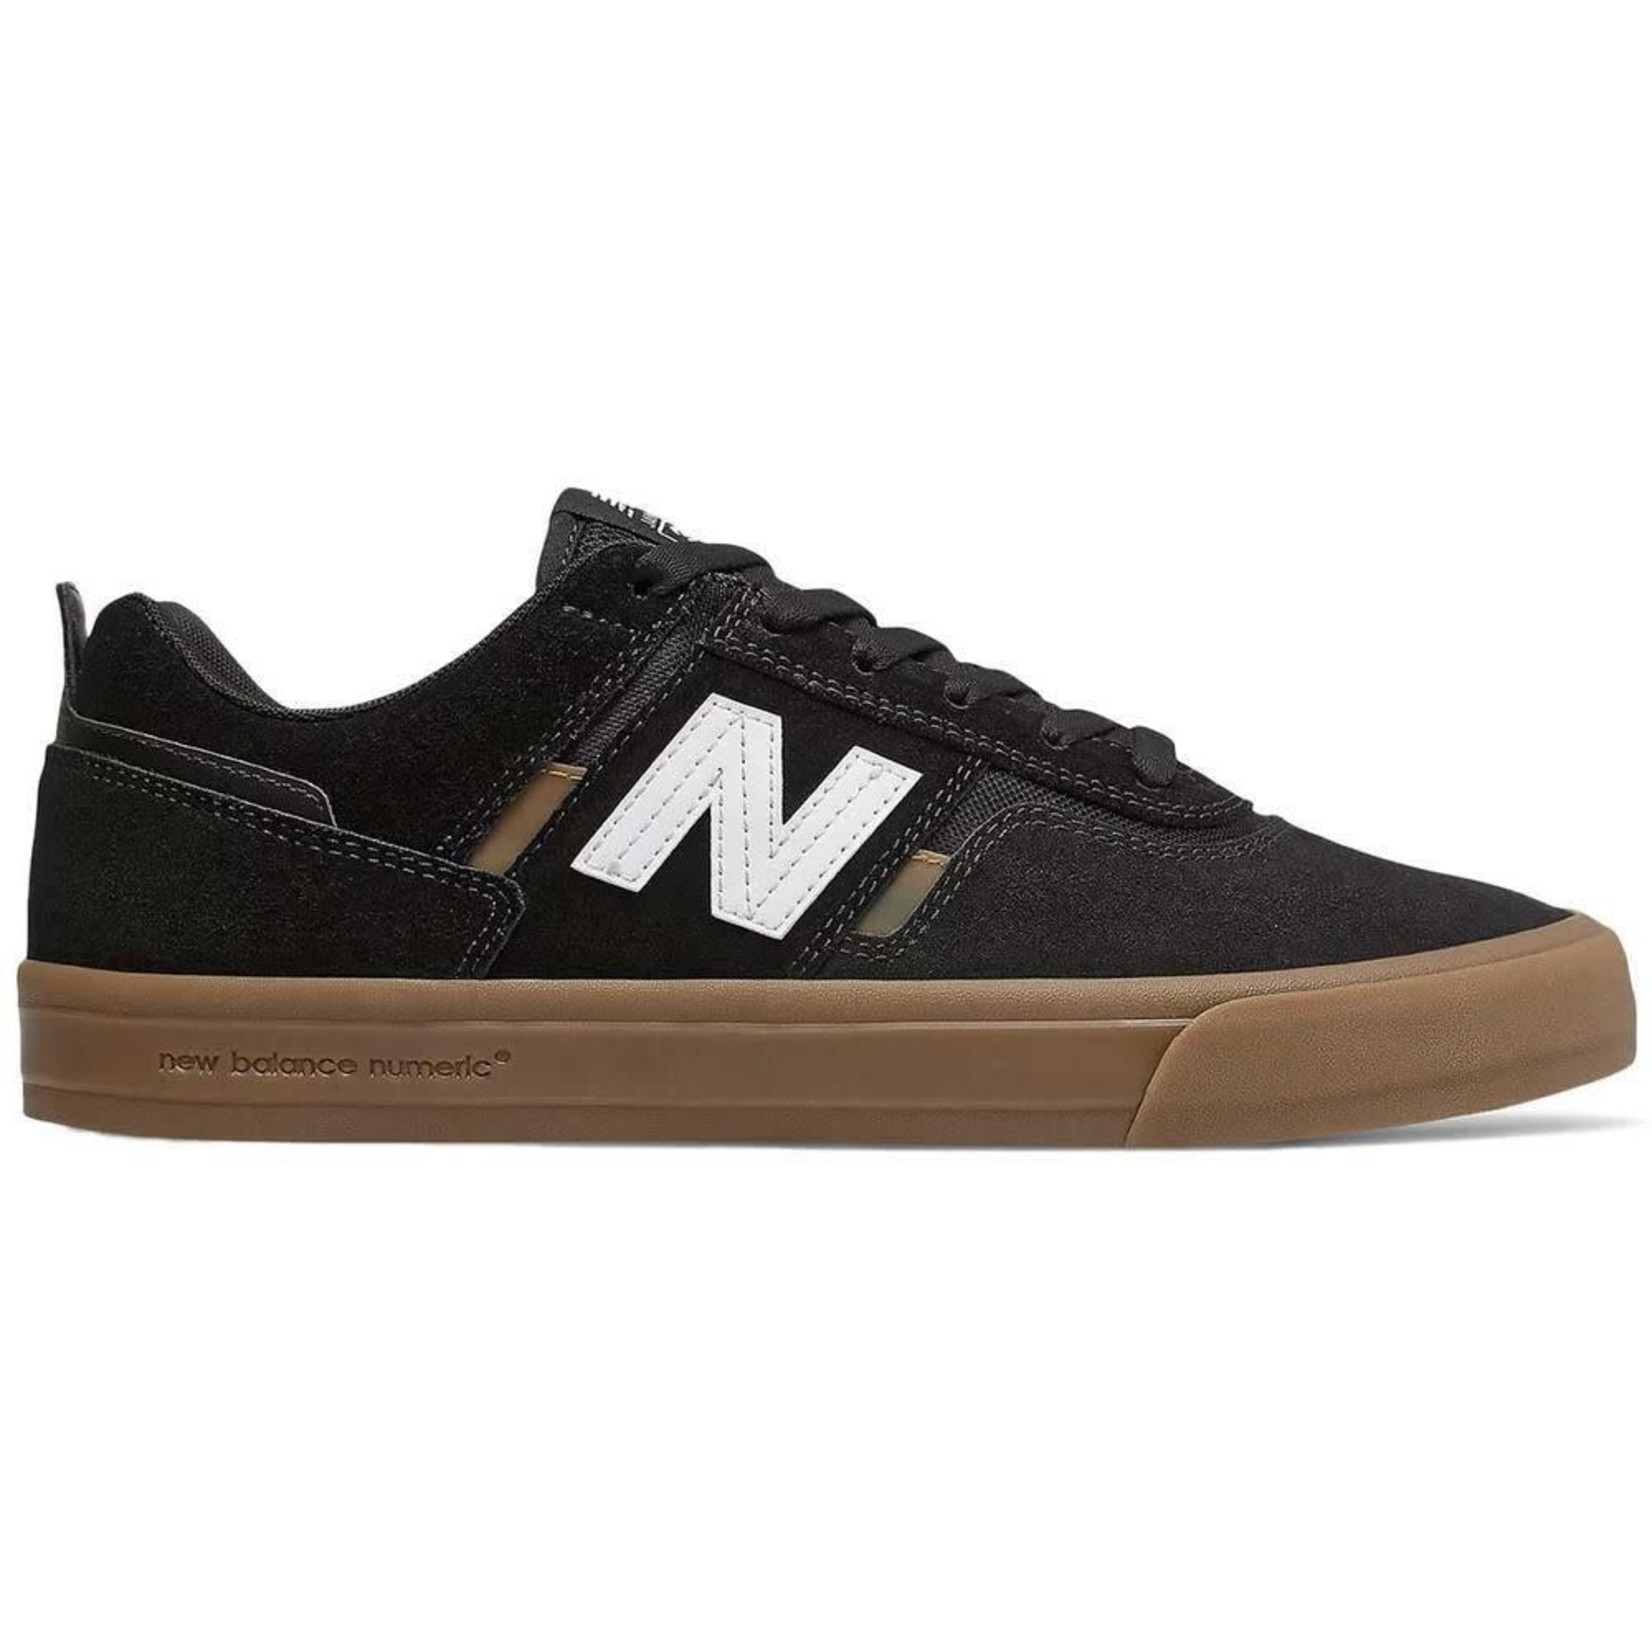 New Balance New Balance 306 Jamie Foy Skate Shoes - Black/White/Gum -